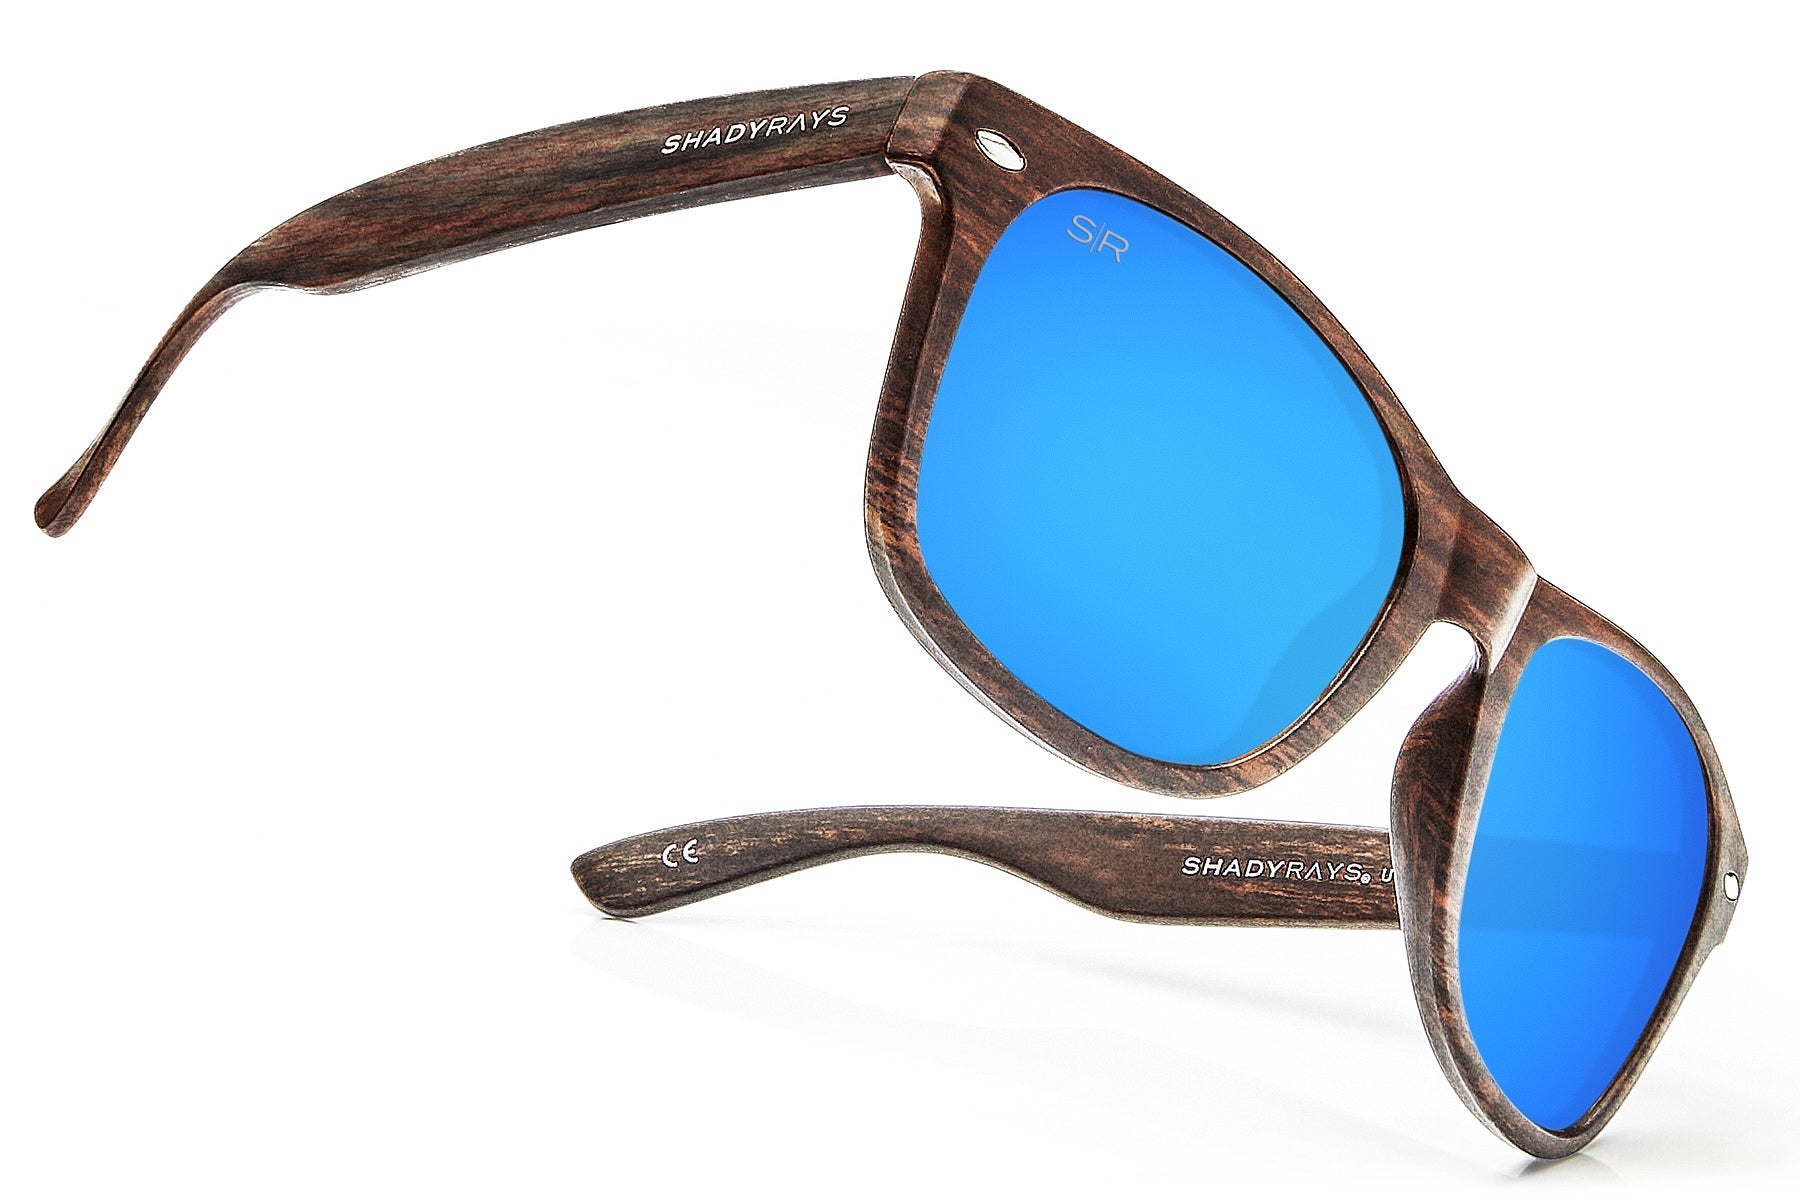 Classic Timber - Ocean Polarized Timber Series Shady Rays® | Polarized Sunglasses 